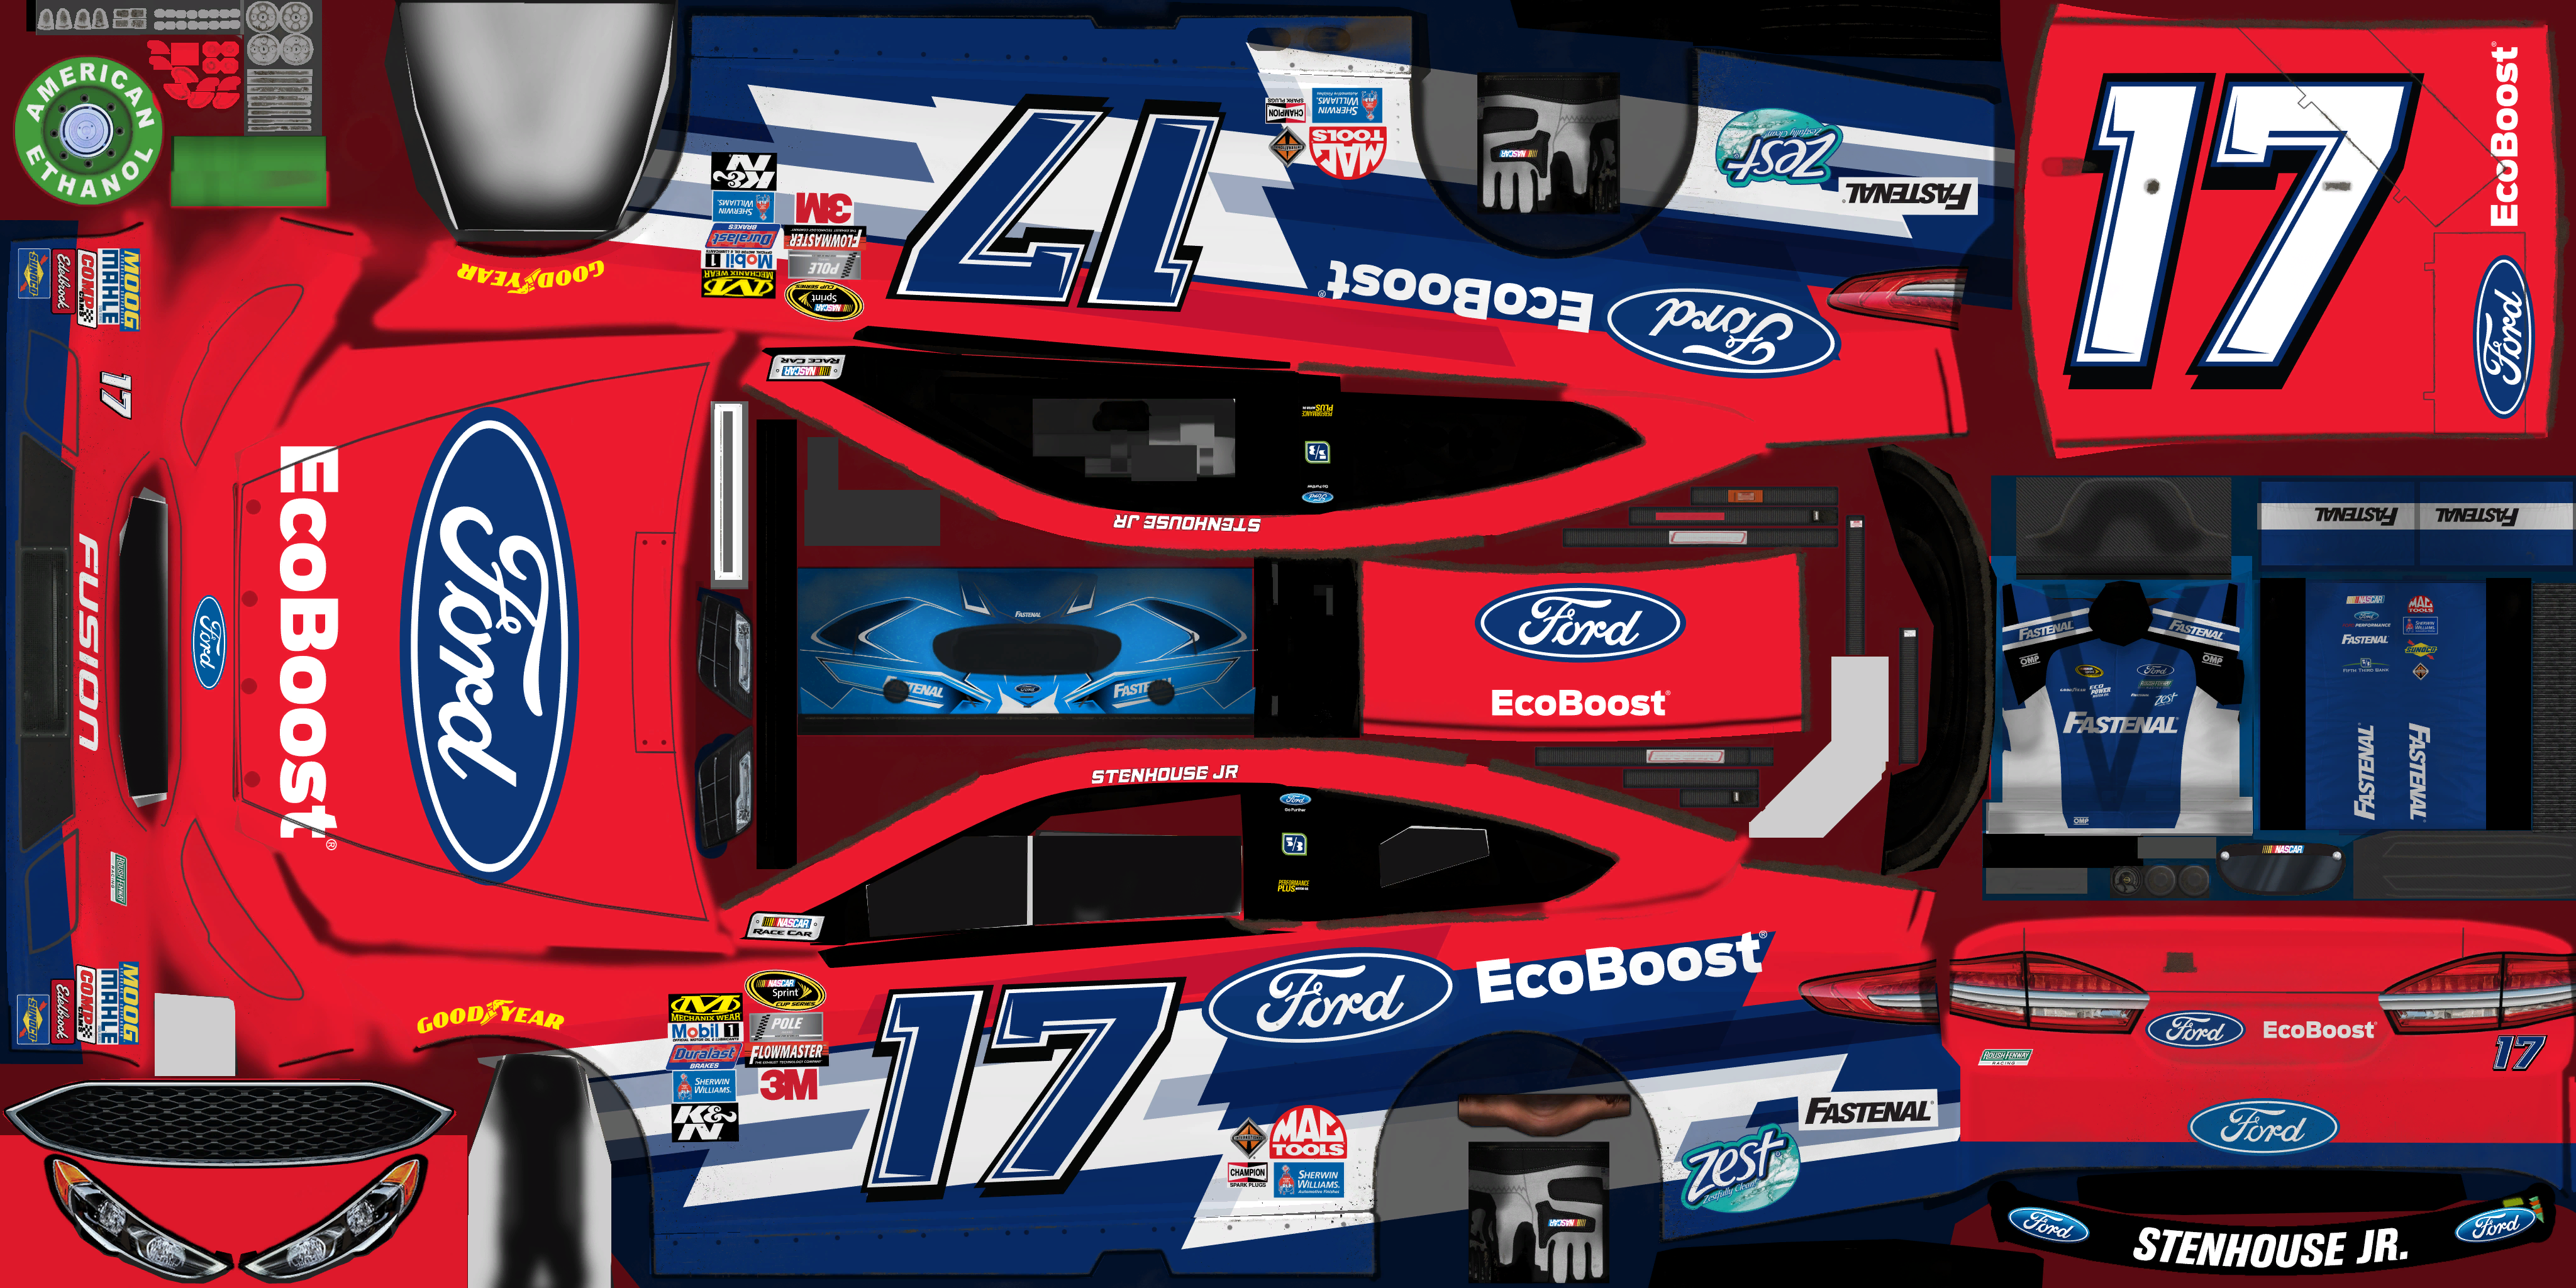 NASCAR Heat Evolution - #17 Ricky Stenhouse Jr. (Ford EcoBoost)